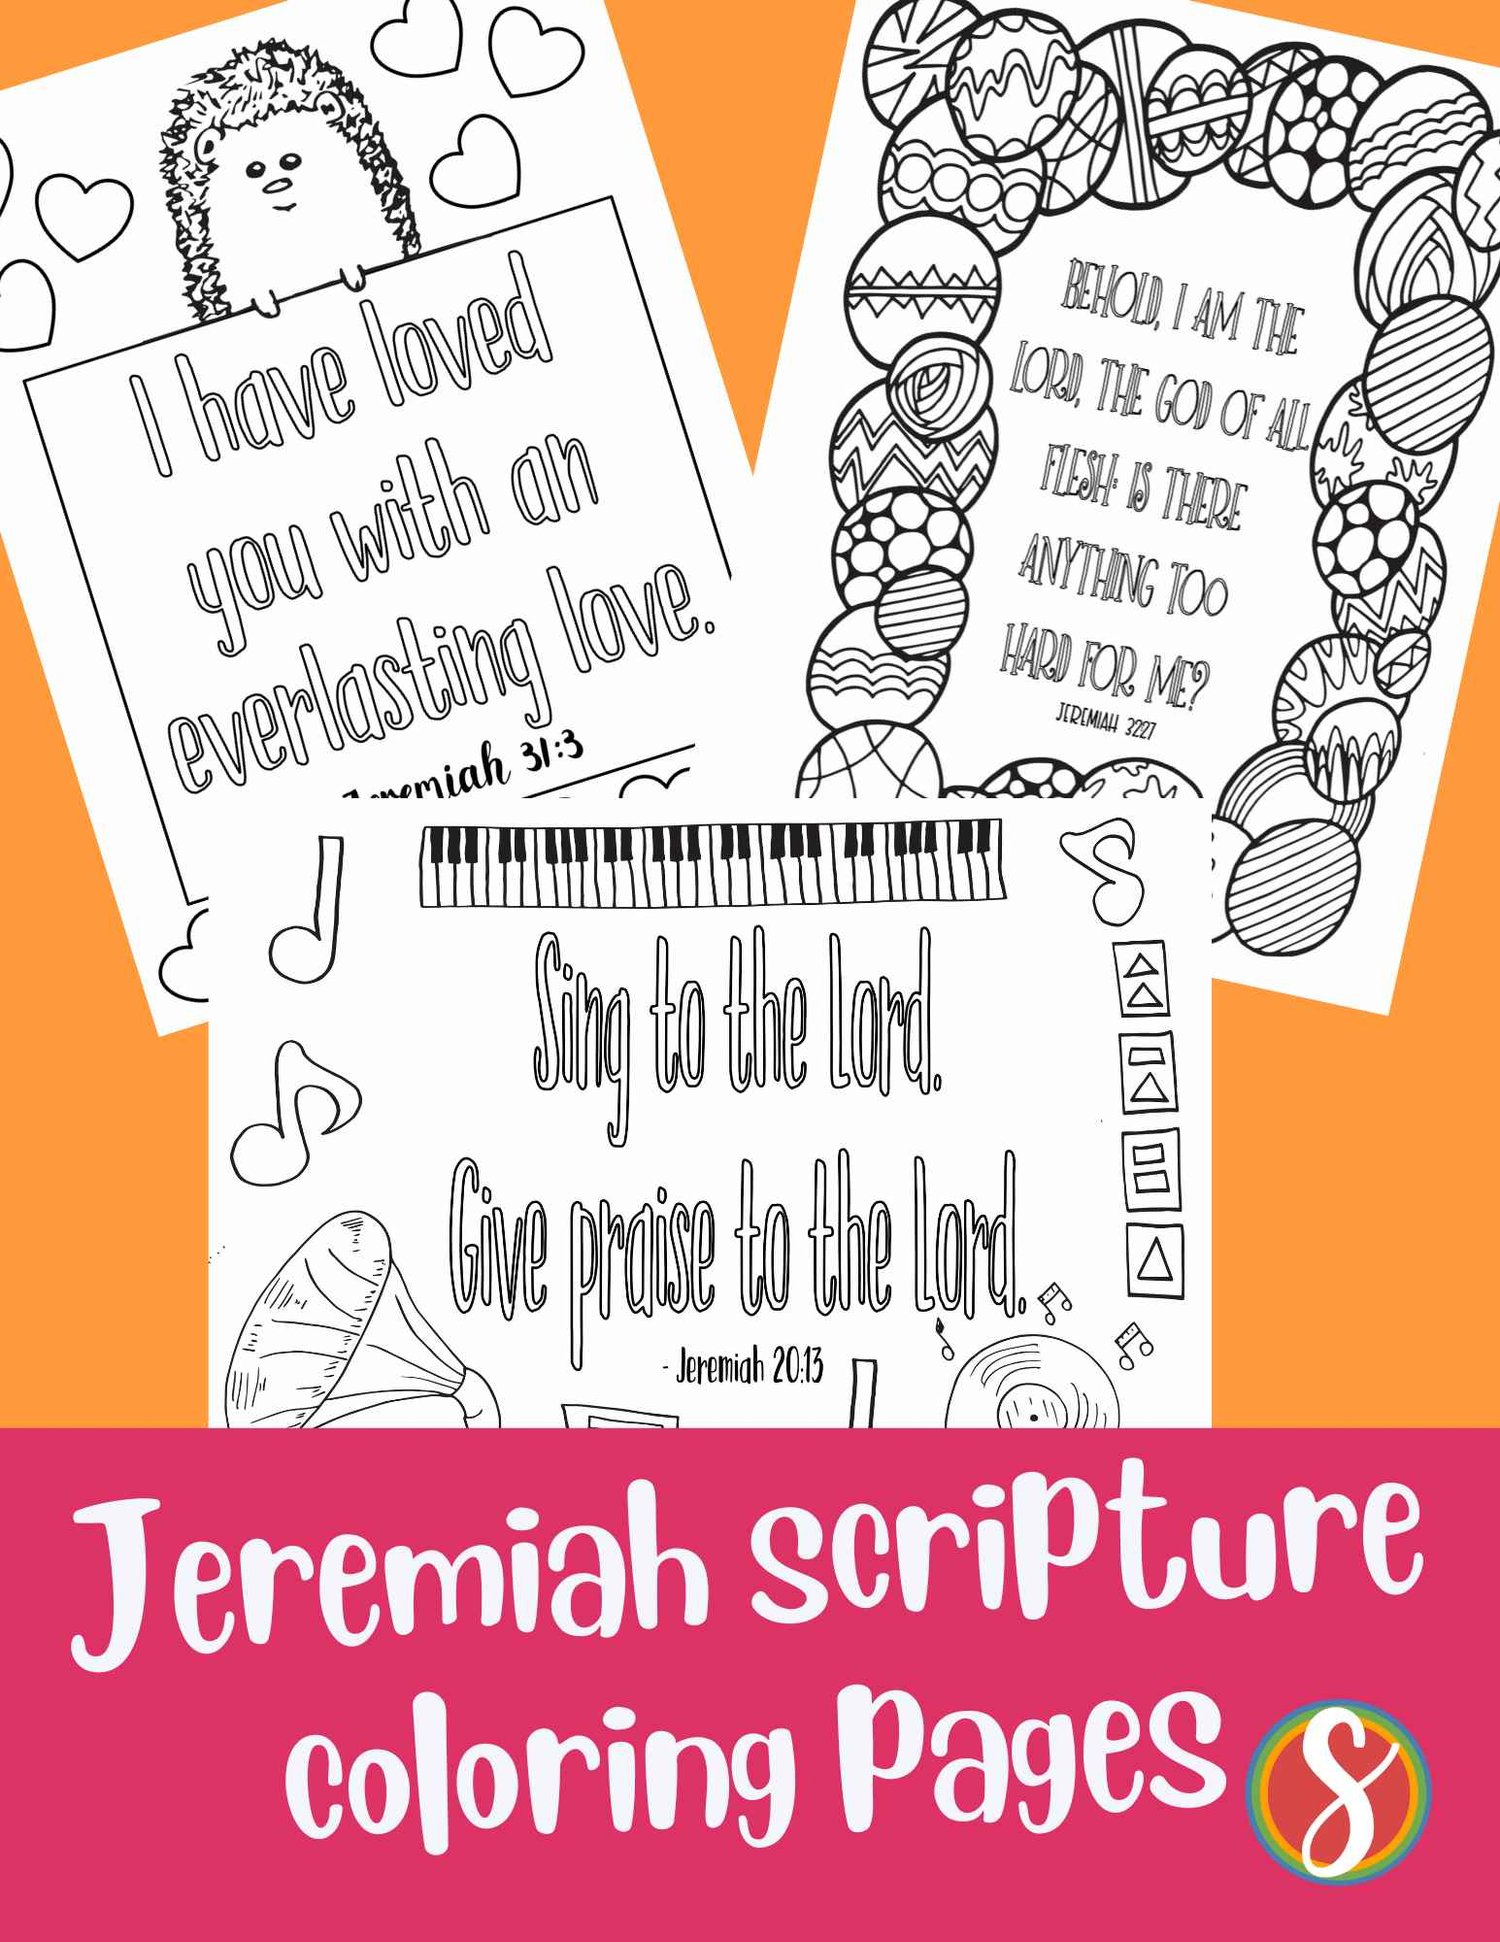 Free jeremiah verses coloring pages â stevie doodles